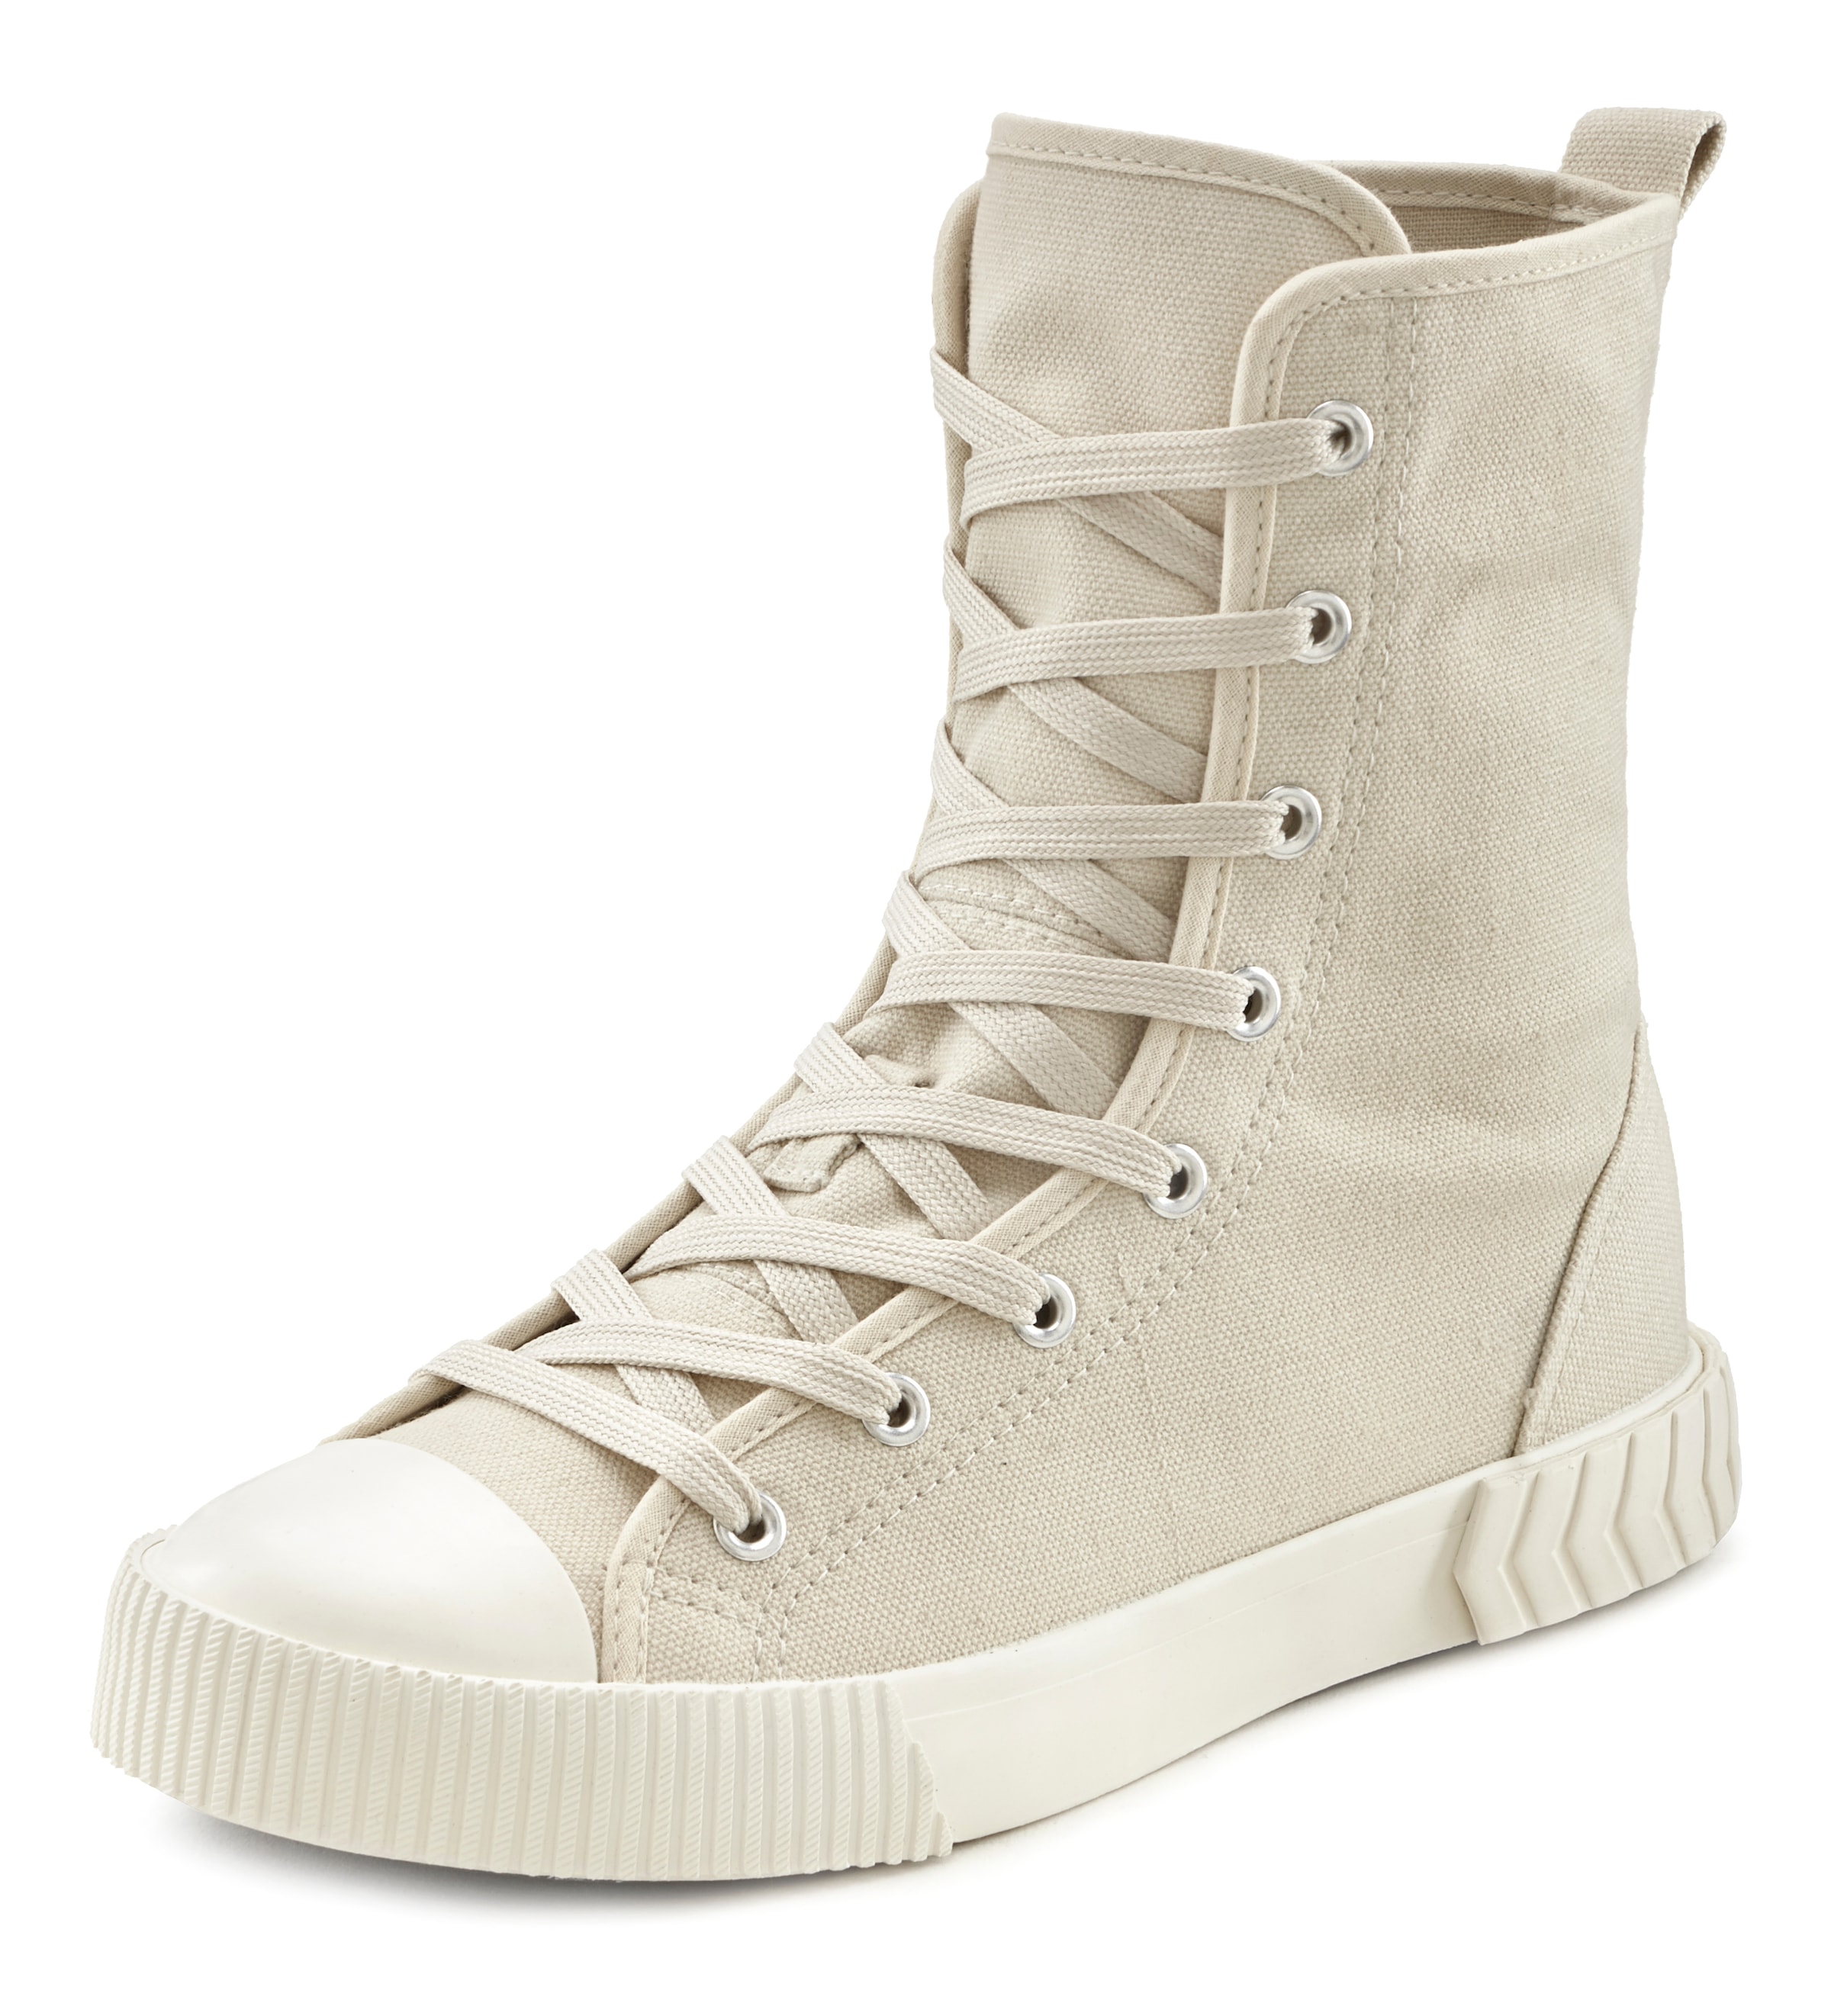 LASCANA Stiefelette, High Top Sneaker, Schnürschuh, Textil-Boots, trendiger  Combat Look bestellen im OTTO Online Shop